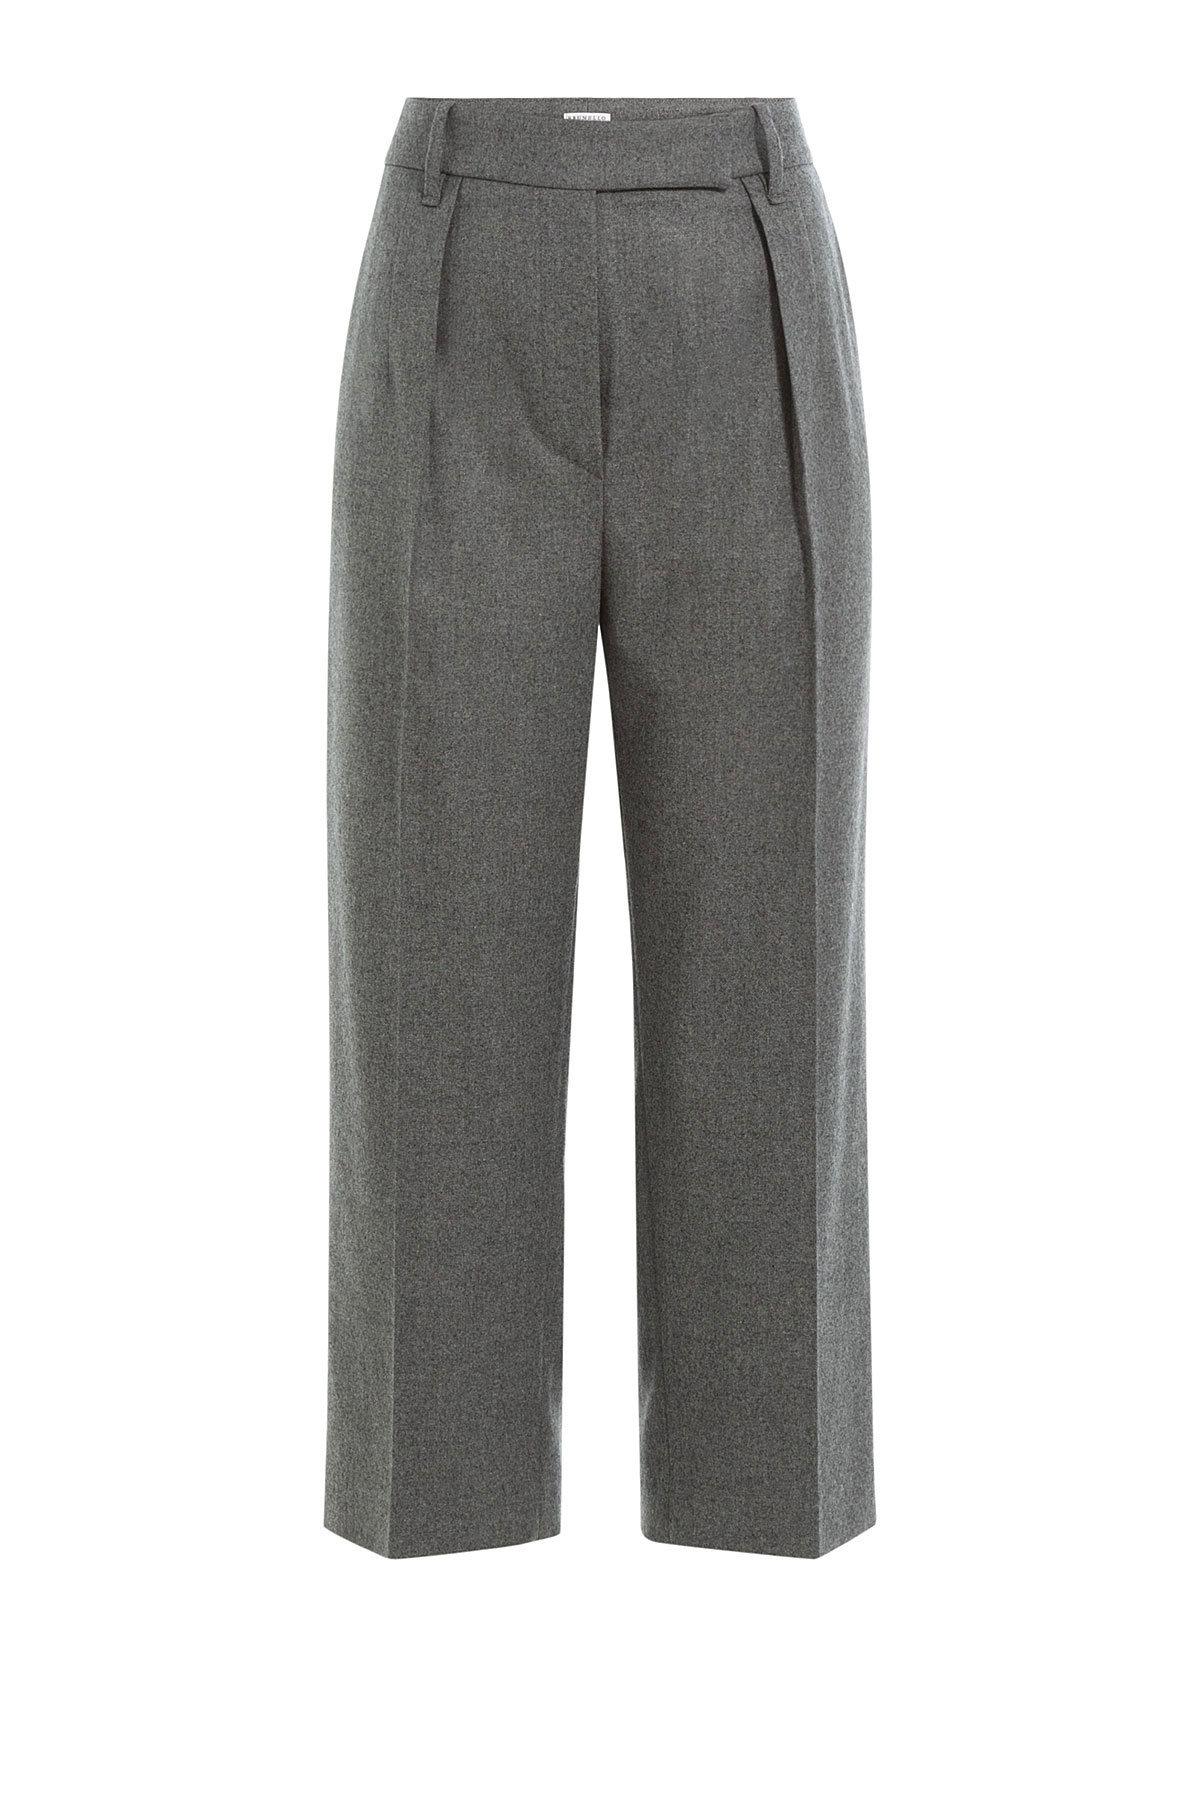 Brunello Cucinelli Cotton-wool Blend Wide Leg Cropped Pants in Gray - Lyst